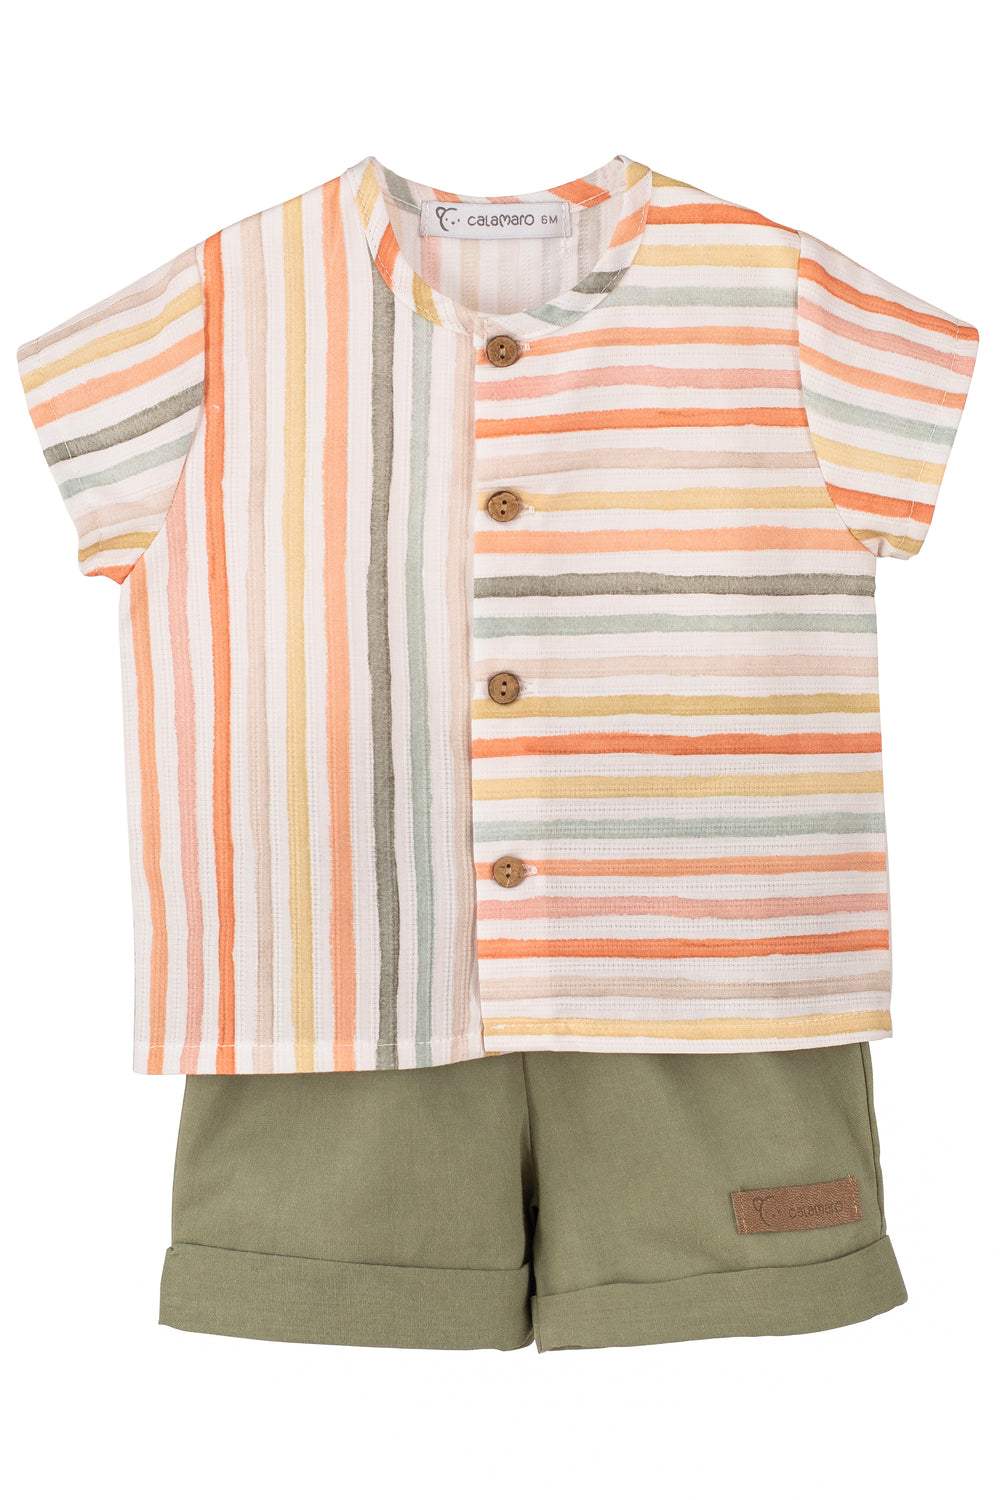 Calamaro PREORDER "Mateo" Orange Striped Shirt & Shorts | Millie and John